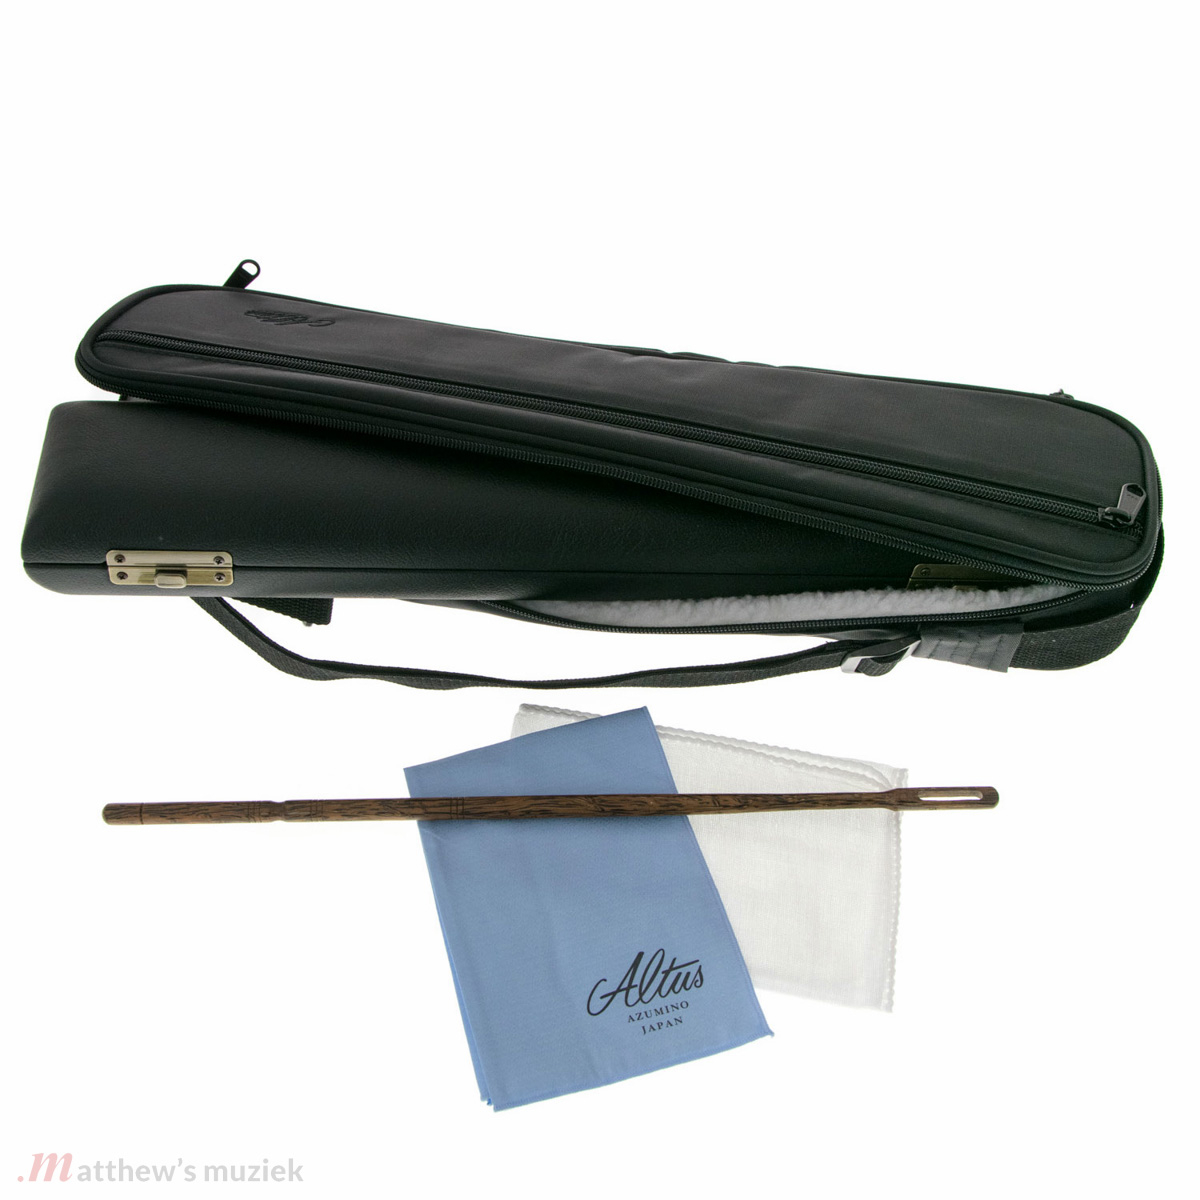 Altus Flute - 1107 BE